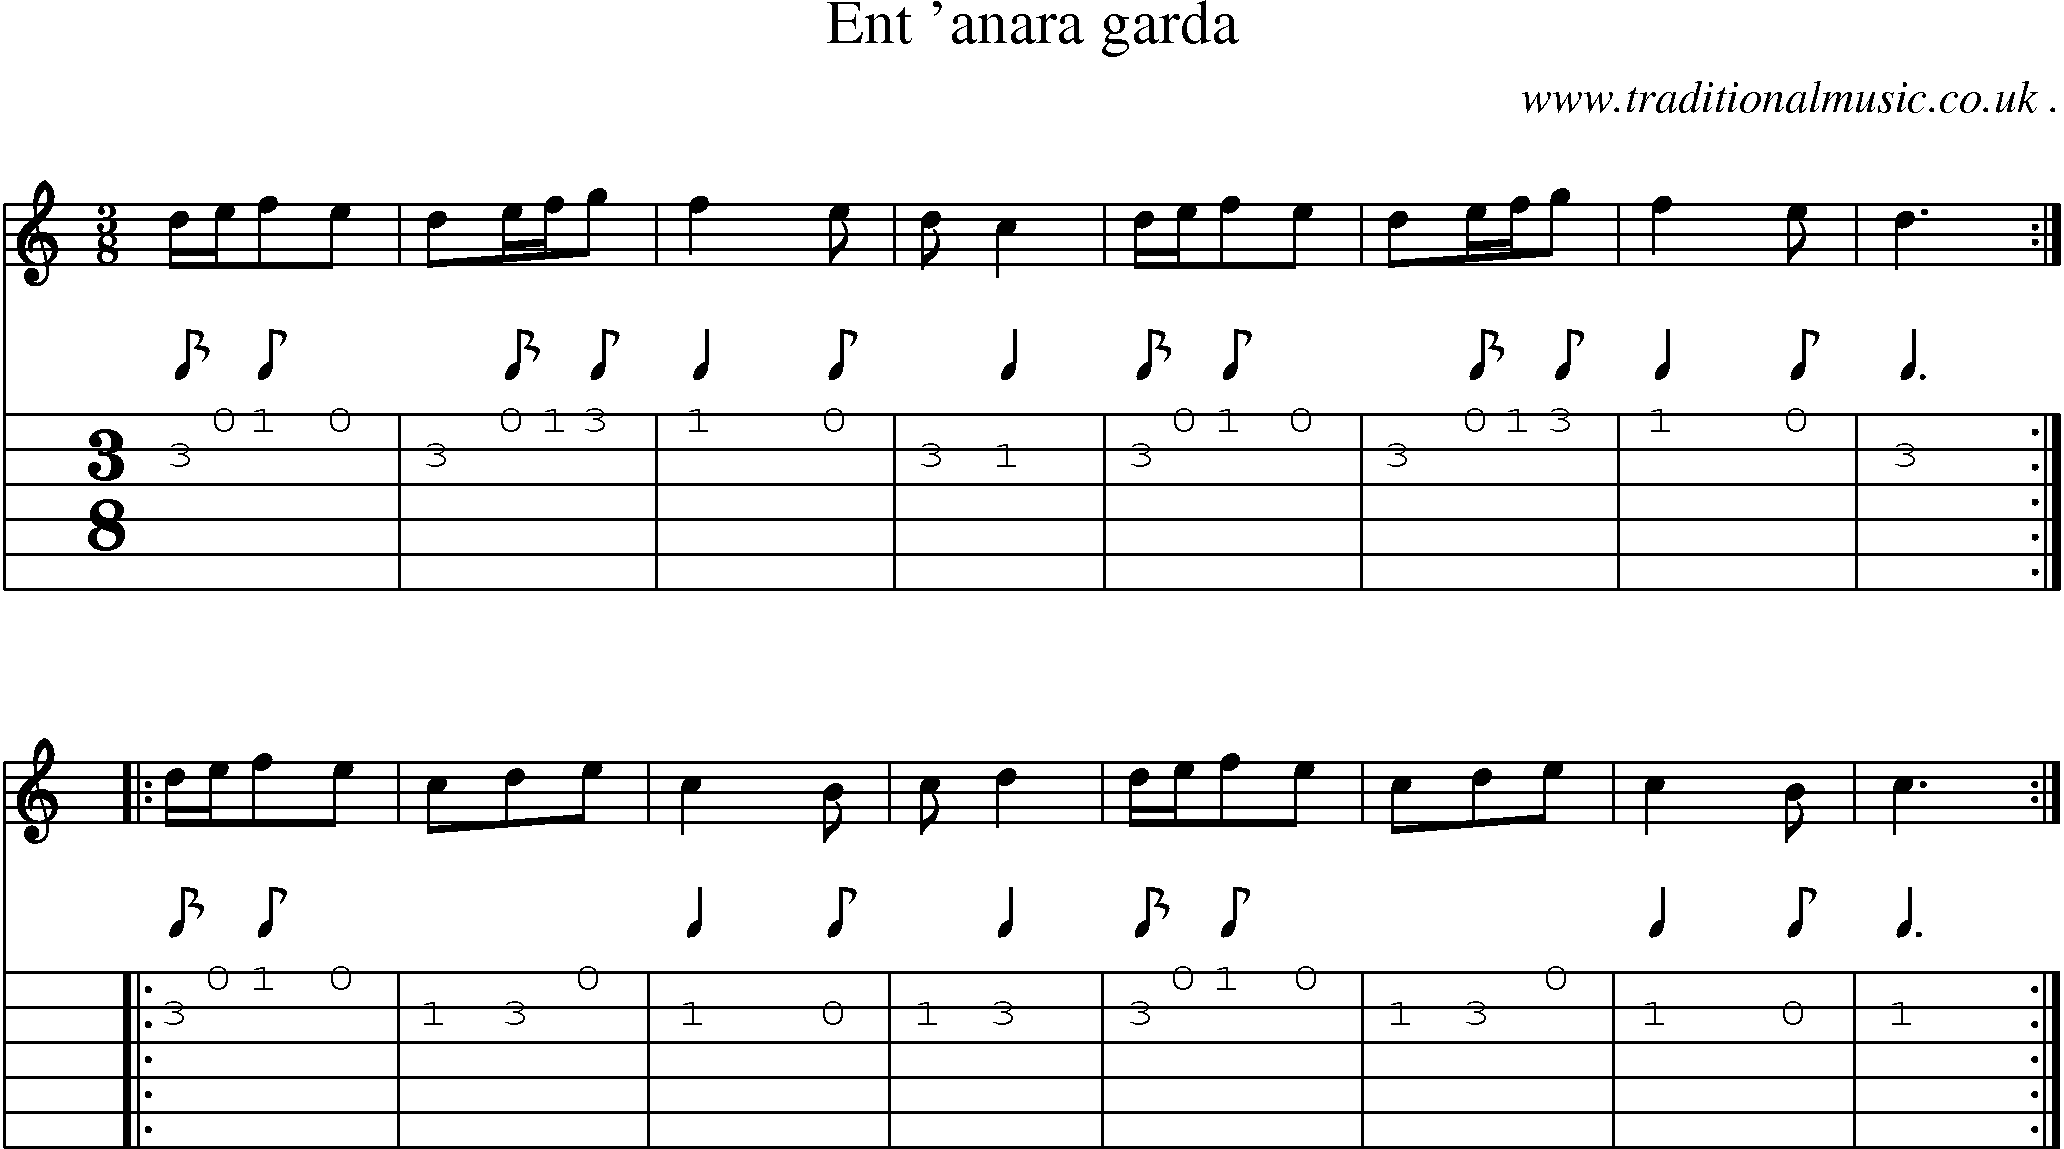 Sheet-Music and Guitar Tabs for Ent Anara Garda